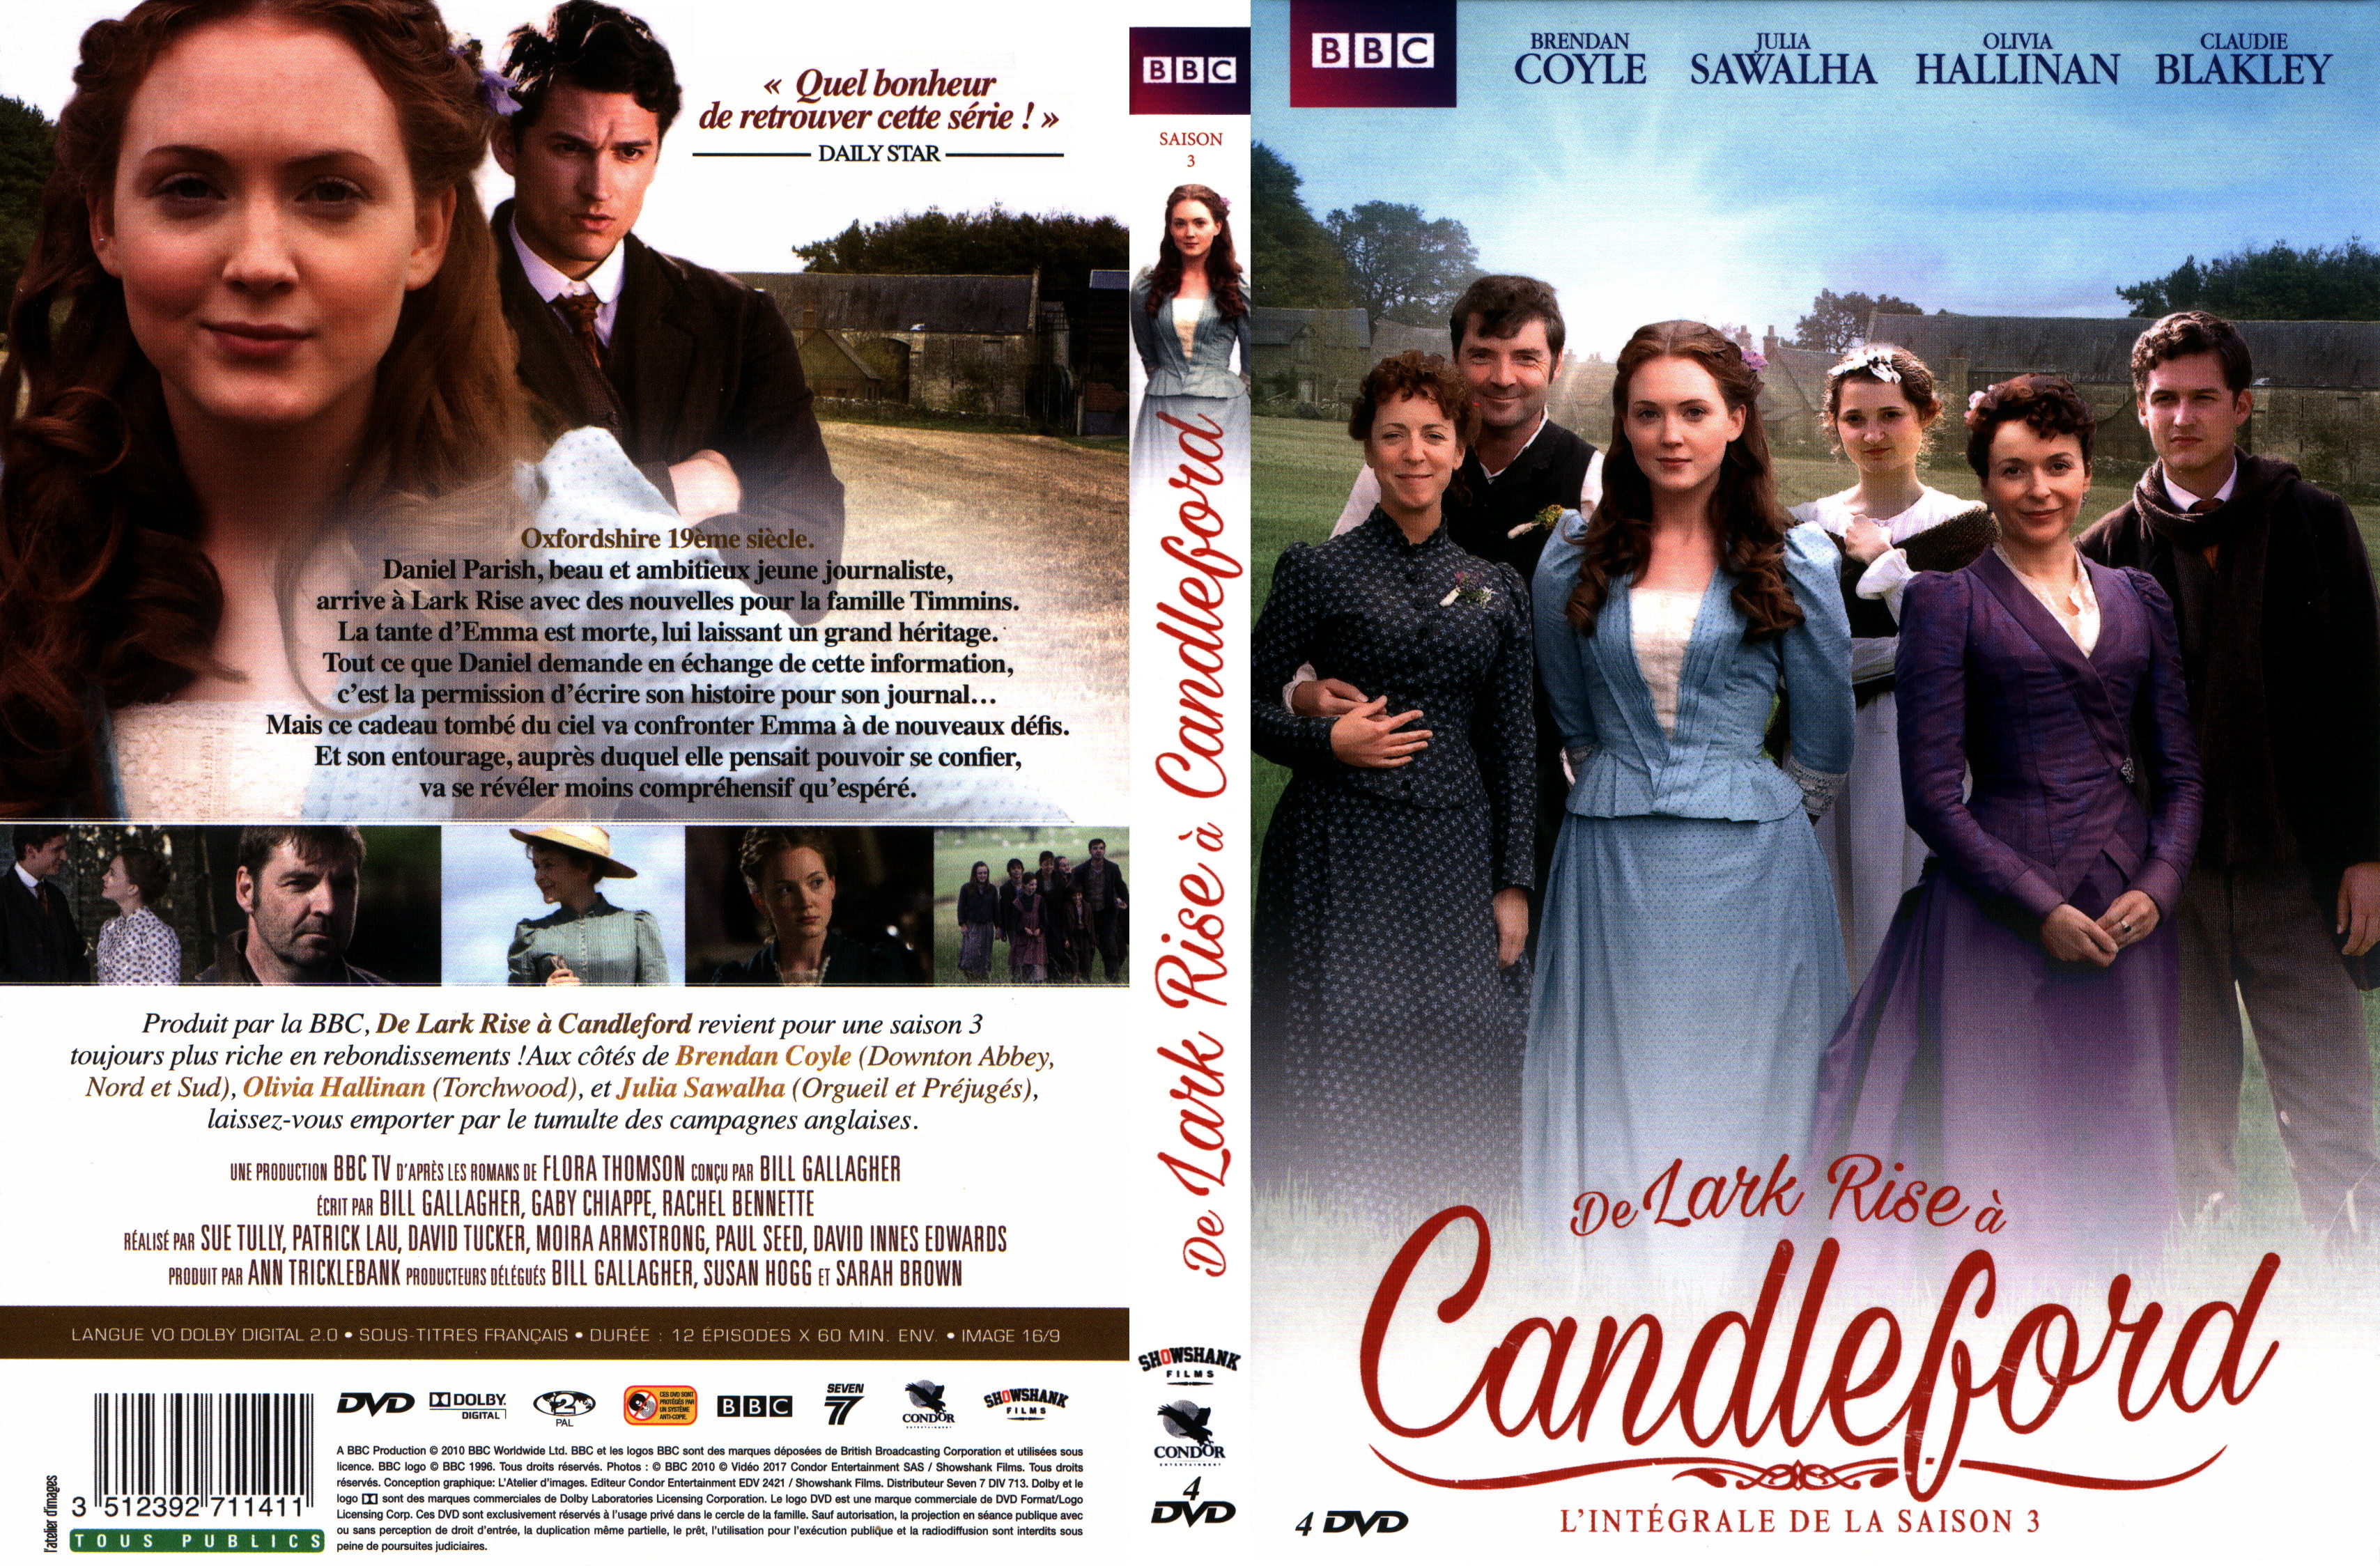 Jaquette DVD Candleford Saison 3